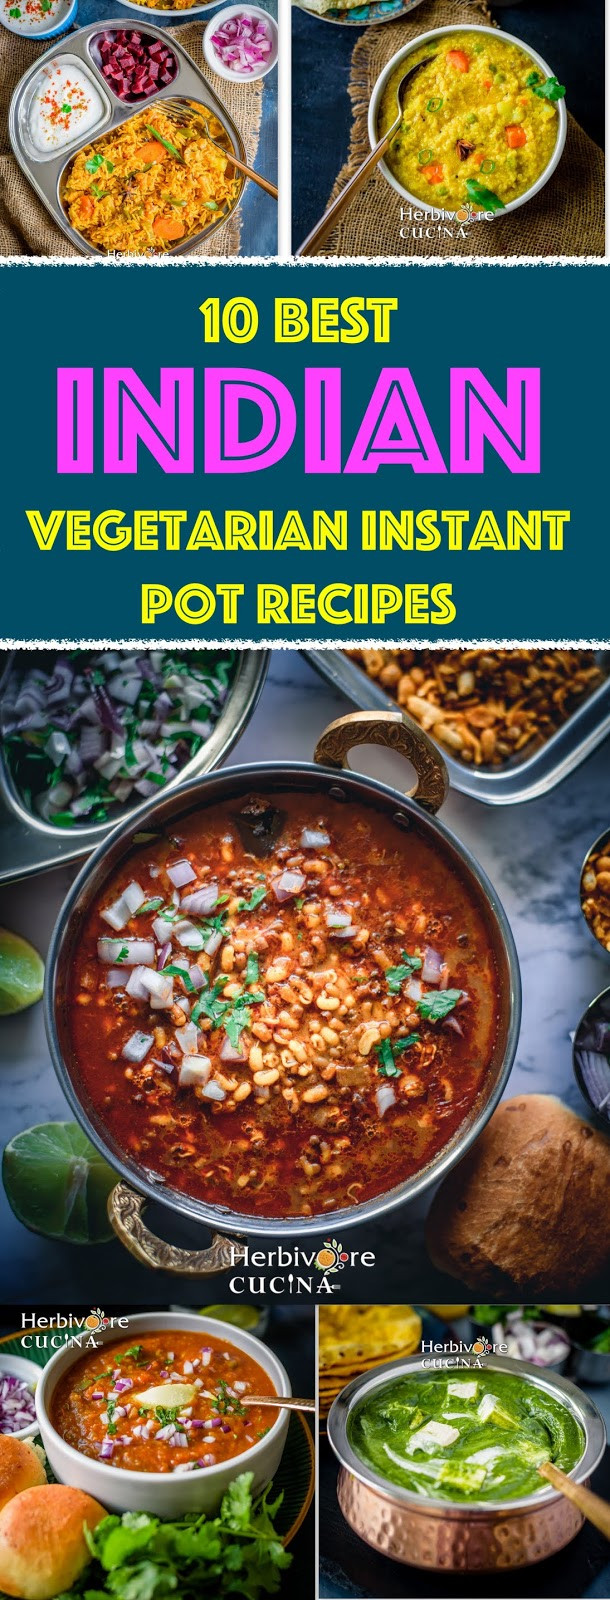 Instant Pot Vegetarian Indian Recipes
 Herbivore Cucina 10 BEST Indian Ve arian Recipes for